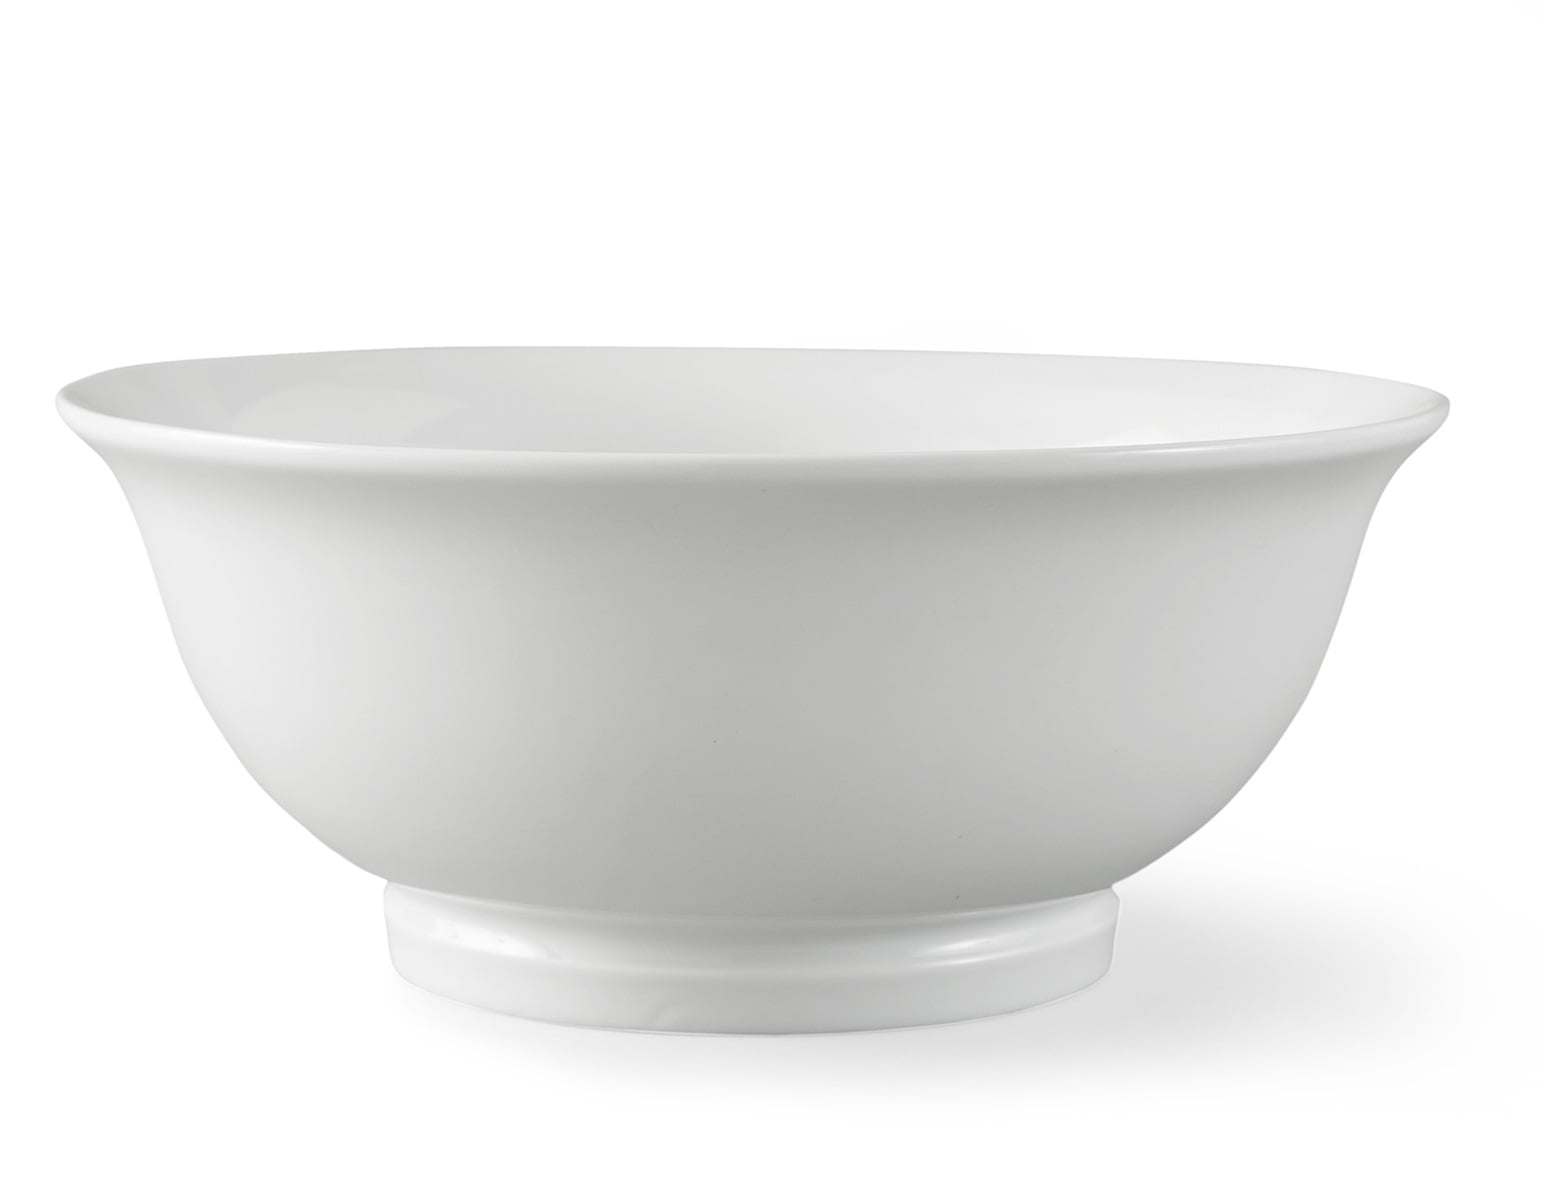 Large White Round Porcelain 26cm Large Catering Restuarant Pasta Serving Bowl 